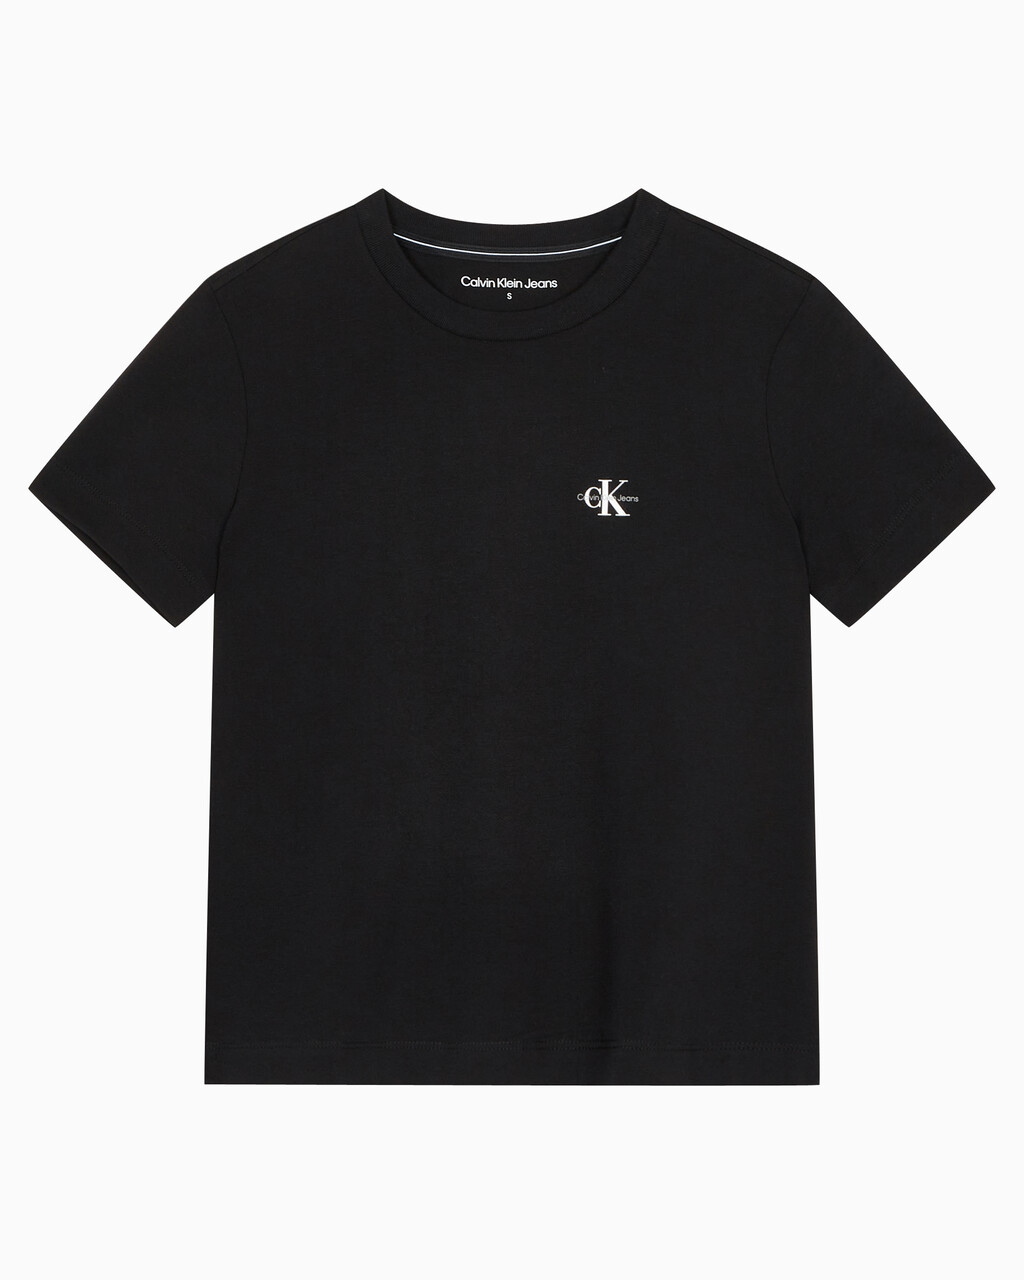 Buy 여성 레귤러핏 모던로고 2PK 반팔 티셔츠 in color CK BLACK